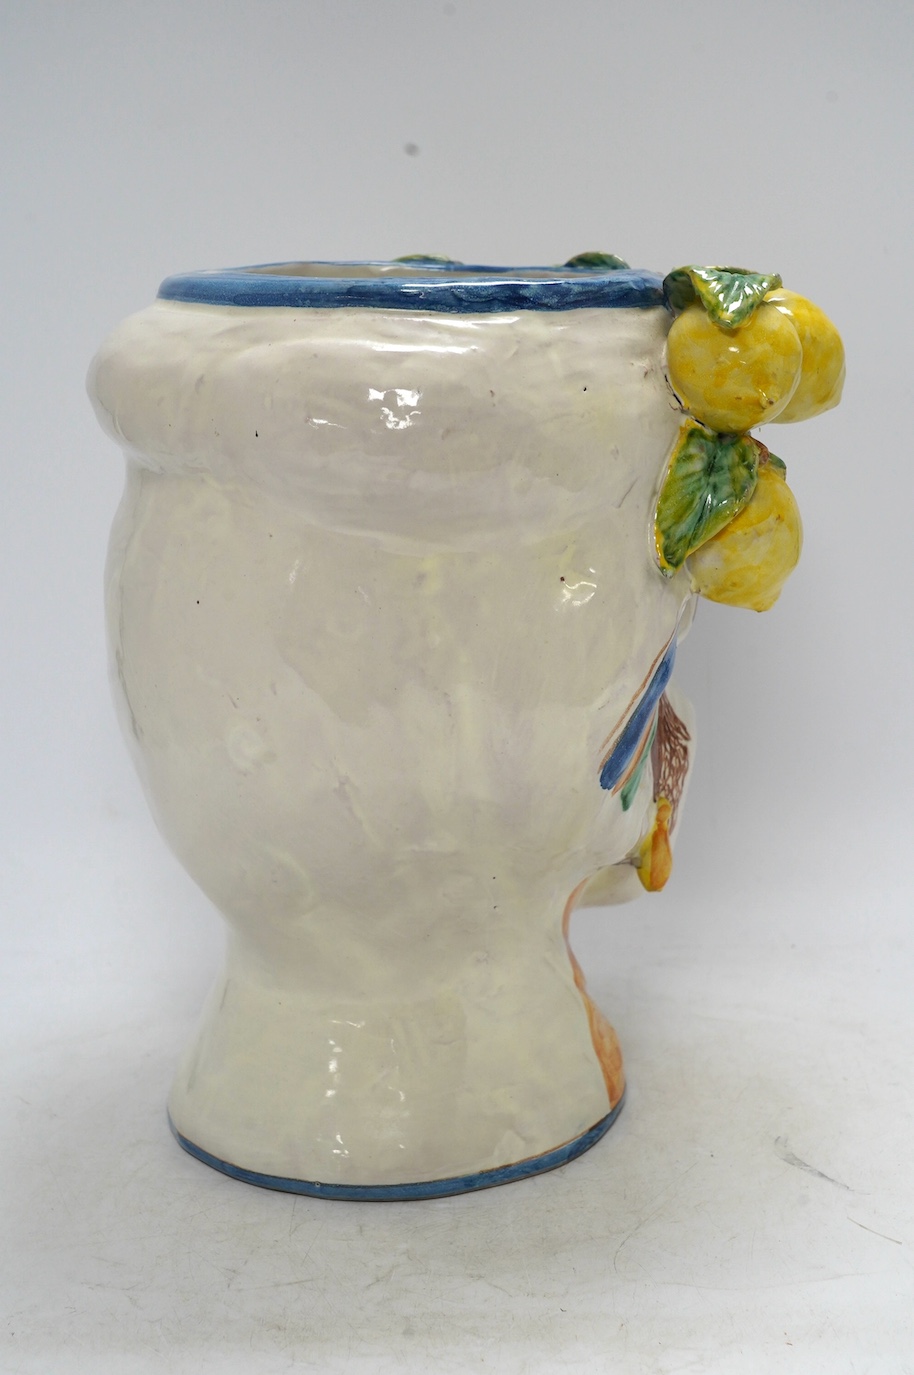 An Agata Treasures 'The Lemon lady' vase, height 31cm. Condition - good